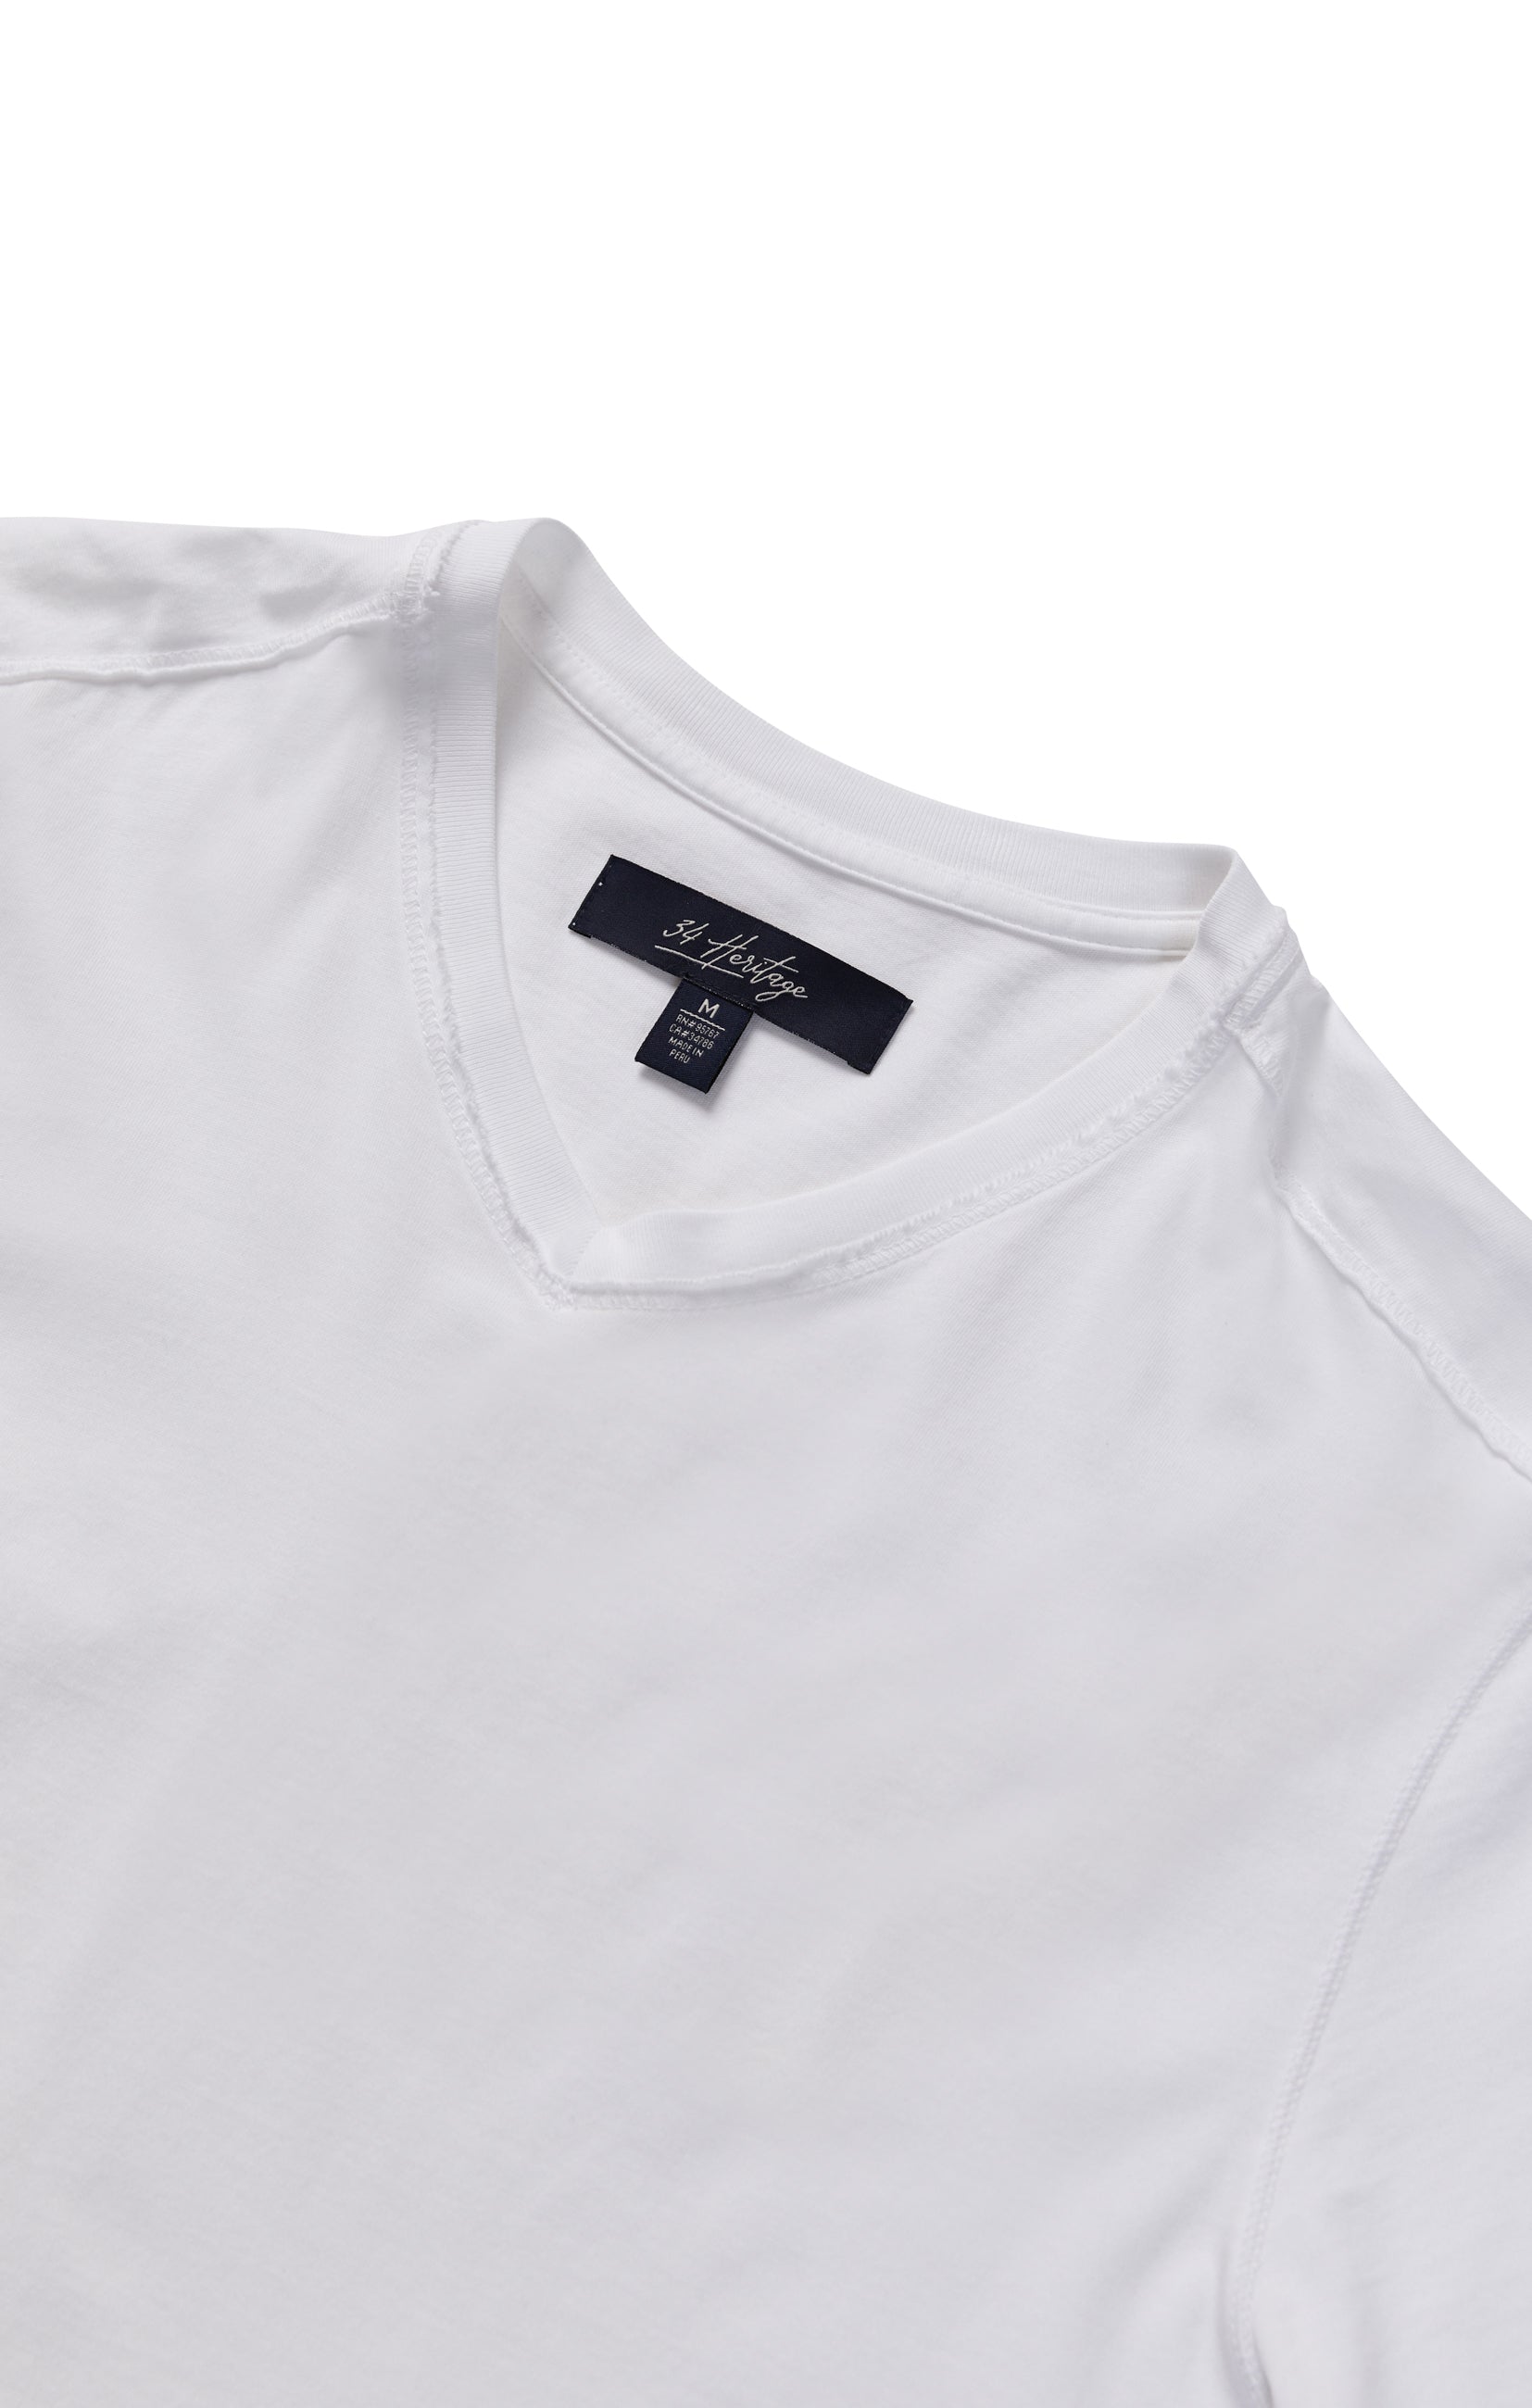 Deconstructed V-Neck T-Shirt in White Image 8